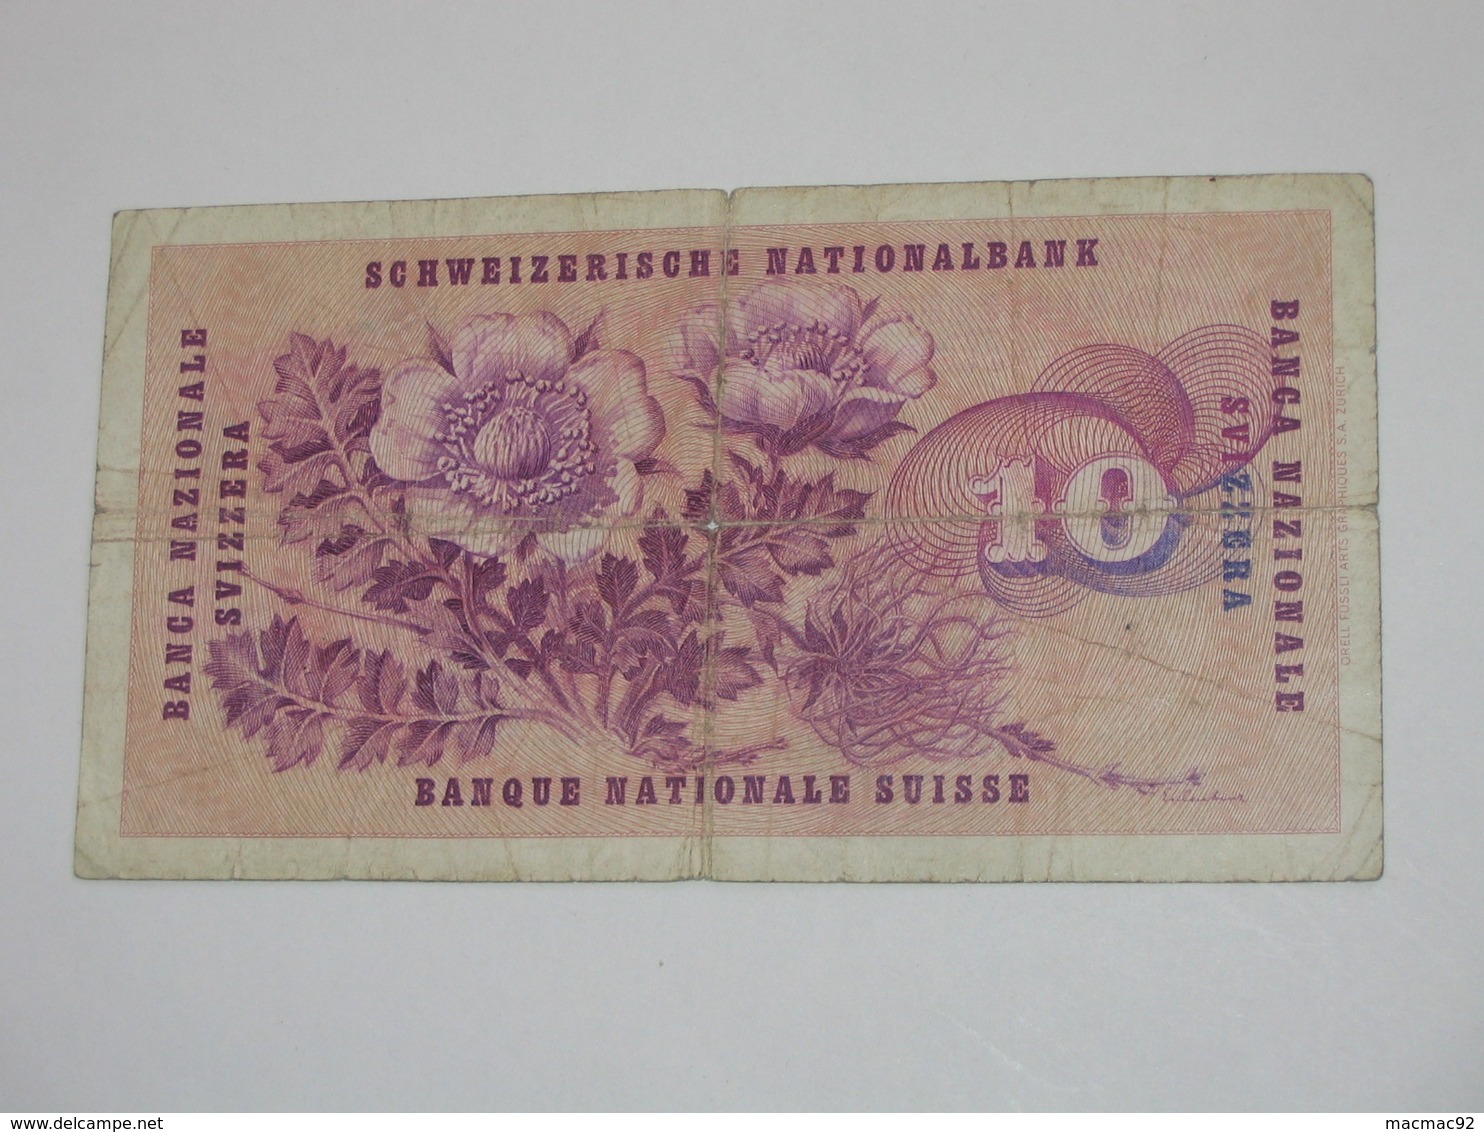 10 Francs SUISSE 1967 - Banque Nationale Suisse - Schweizerische Nationalbank   **** EN ACHAT IMMEDIAT ***** - Schweiz